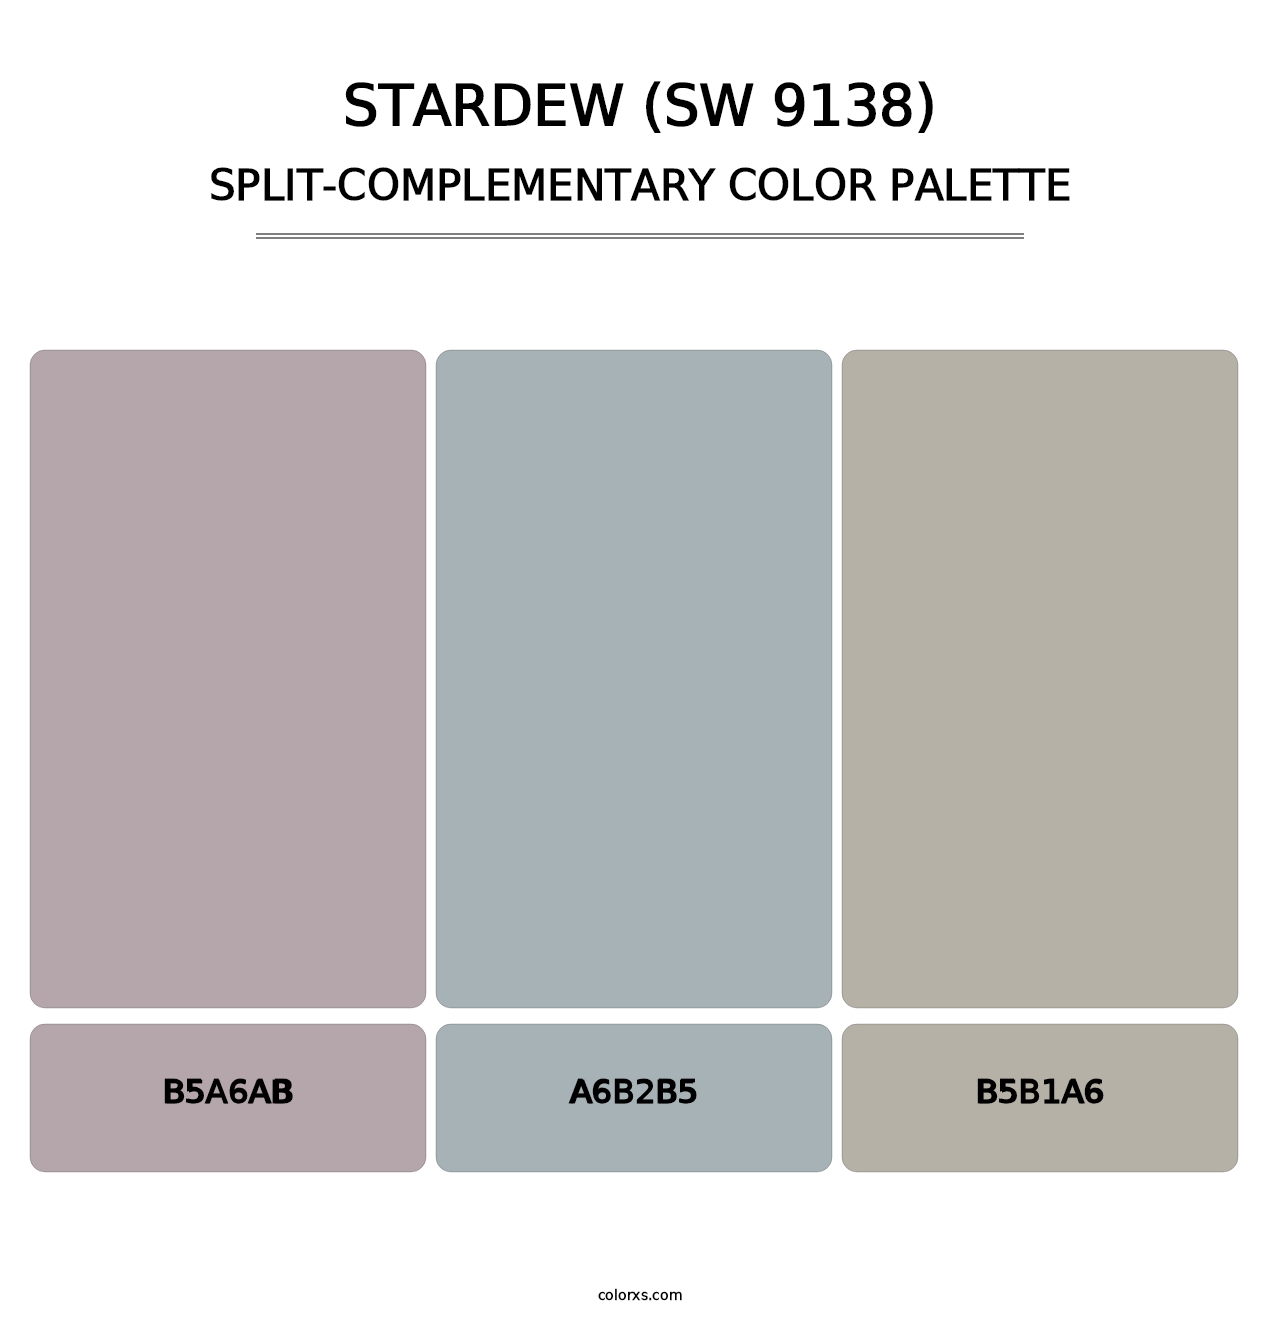 Stardew (SW 9138) - Split-Complementary Color Palette